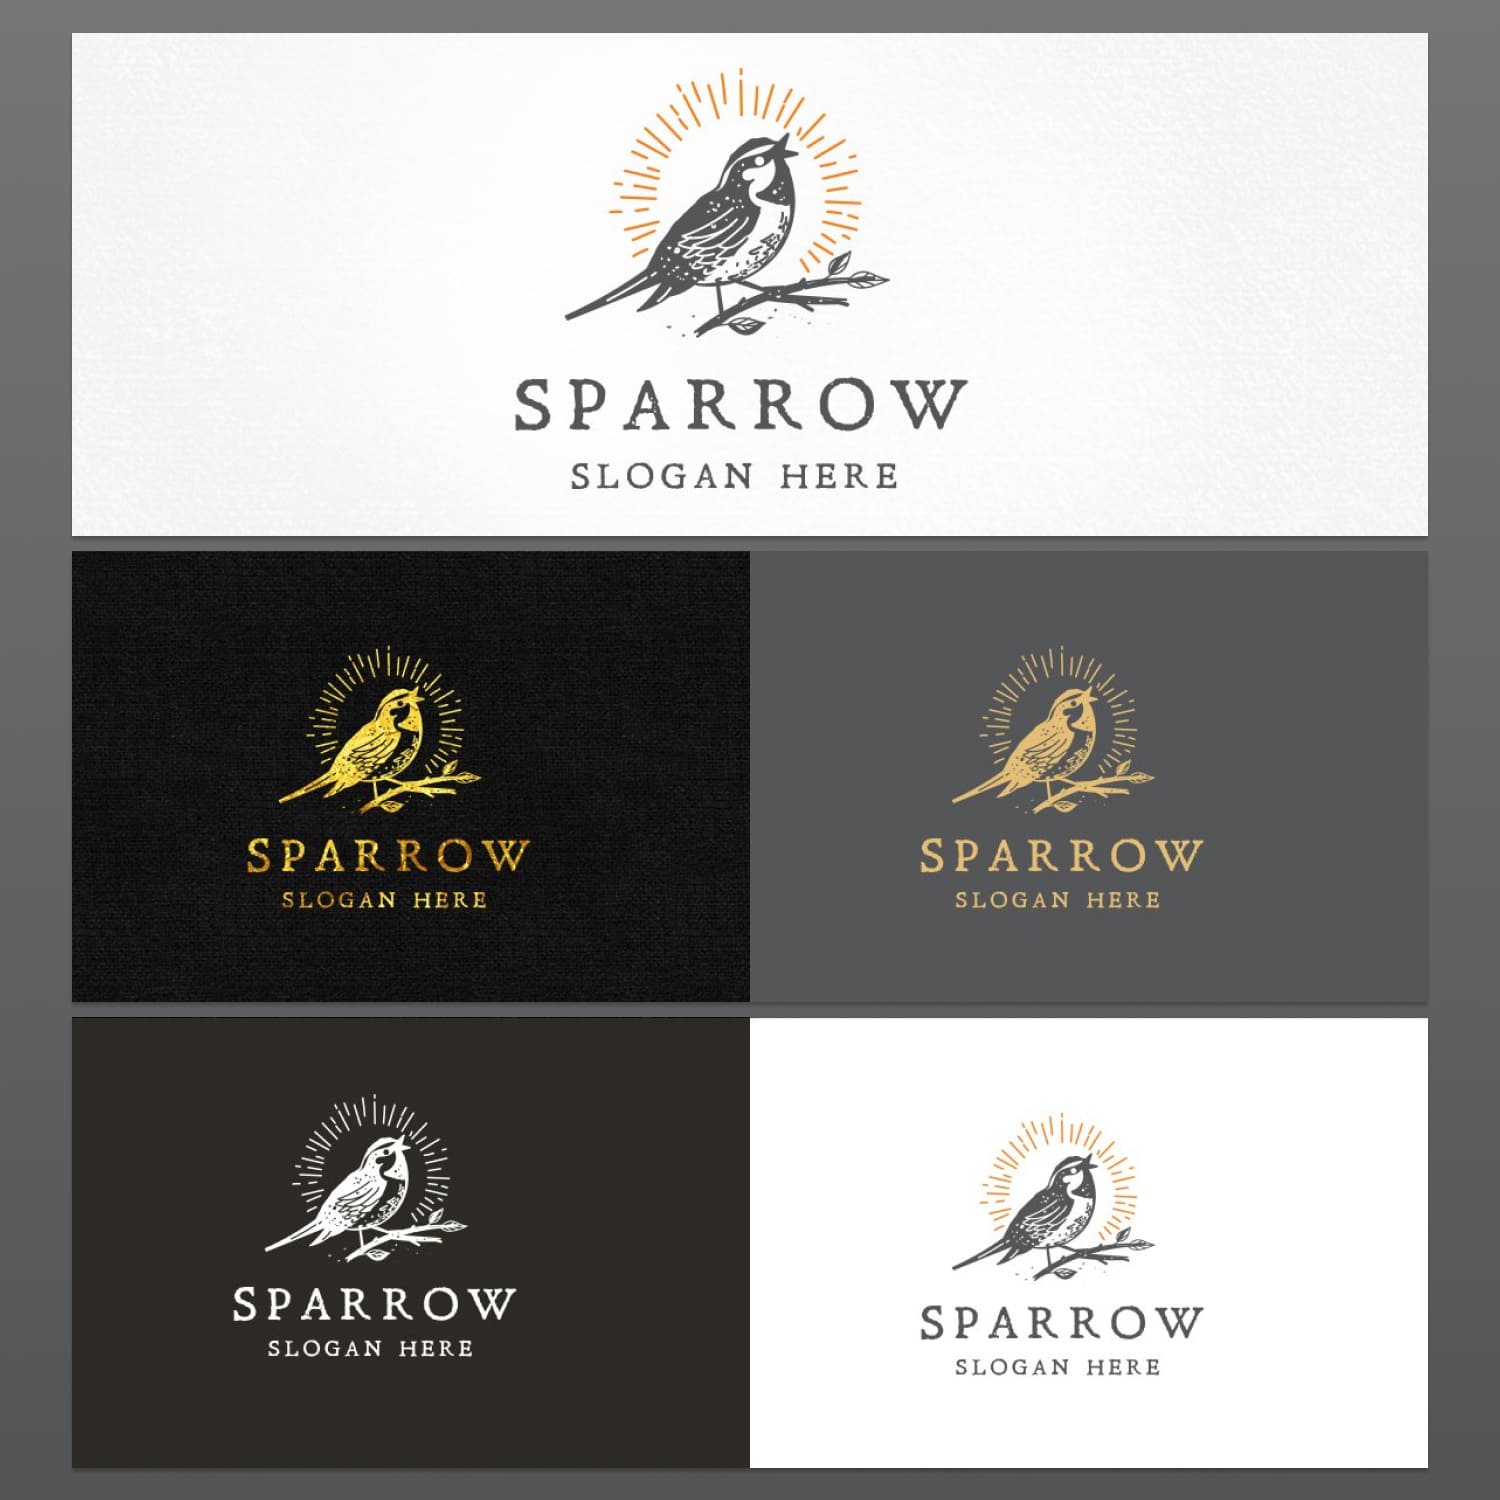 Sparrow Logo Template cover.